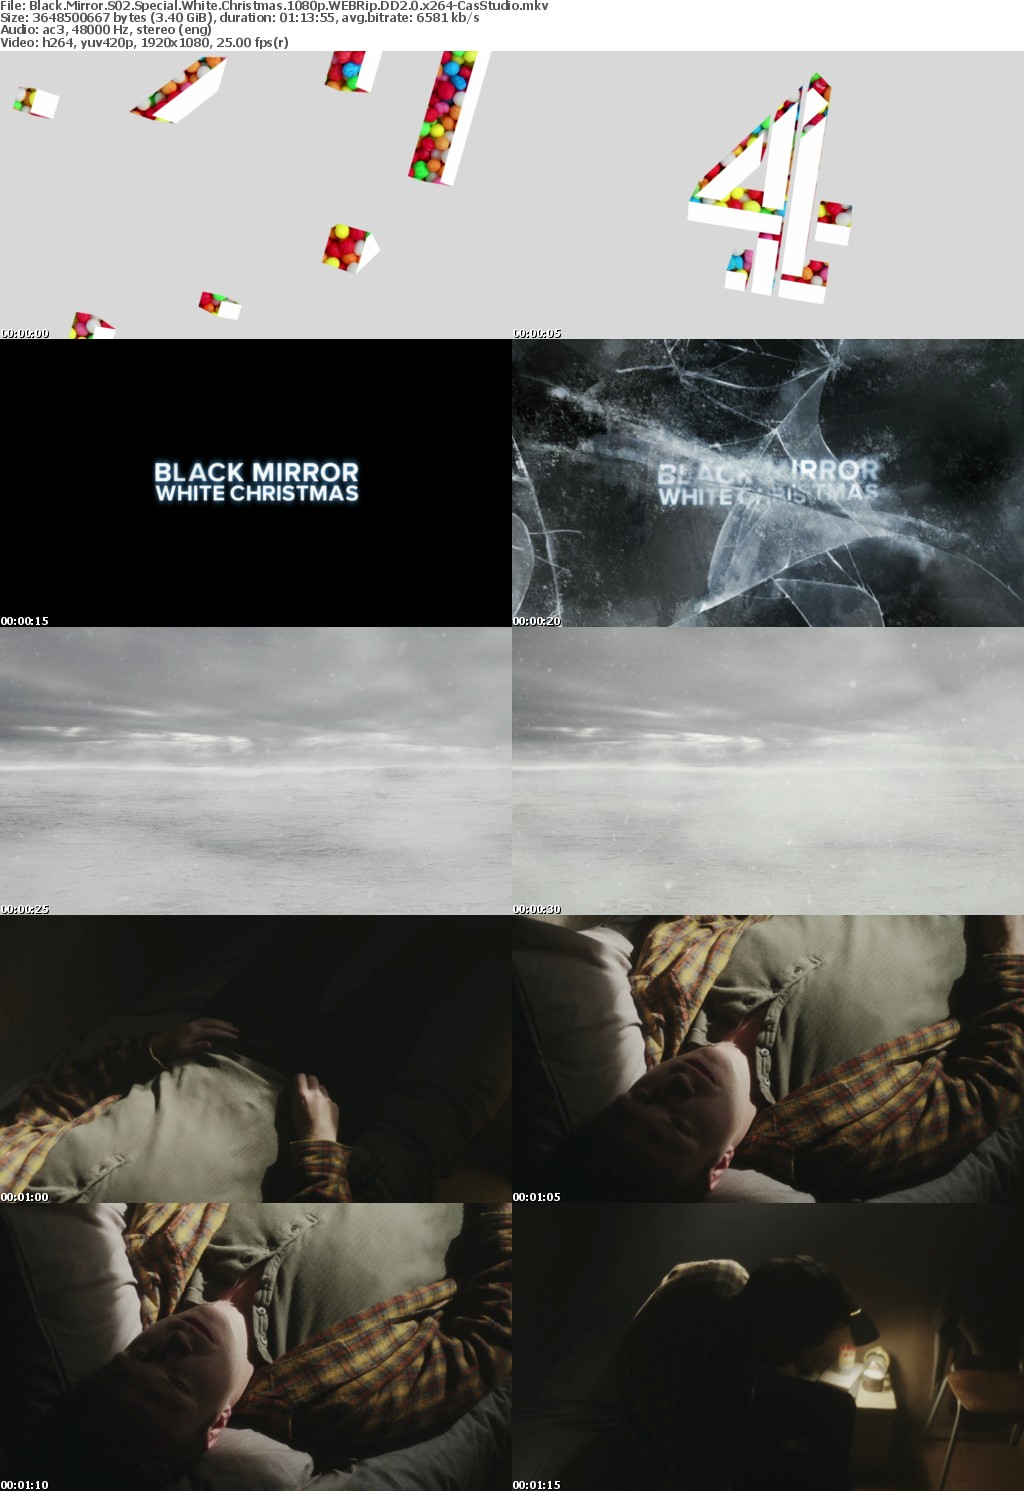 Black Mirror S02 Special White Christmas 1080p WEBRip DD2 0 x264-CasStudio